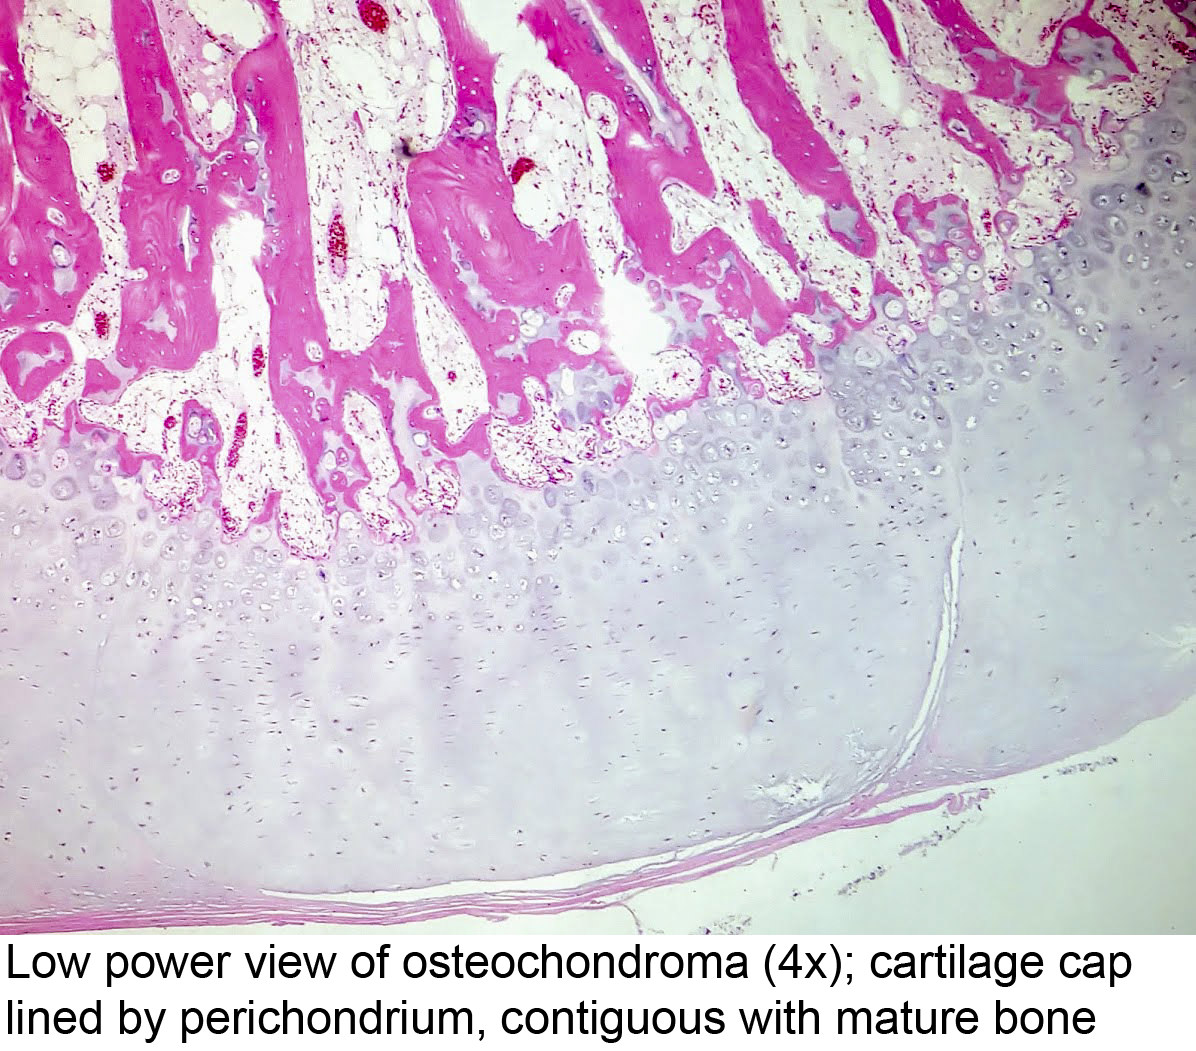 Pathology Outlines - Osteochondroma